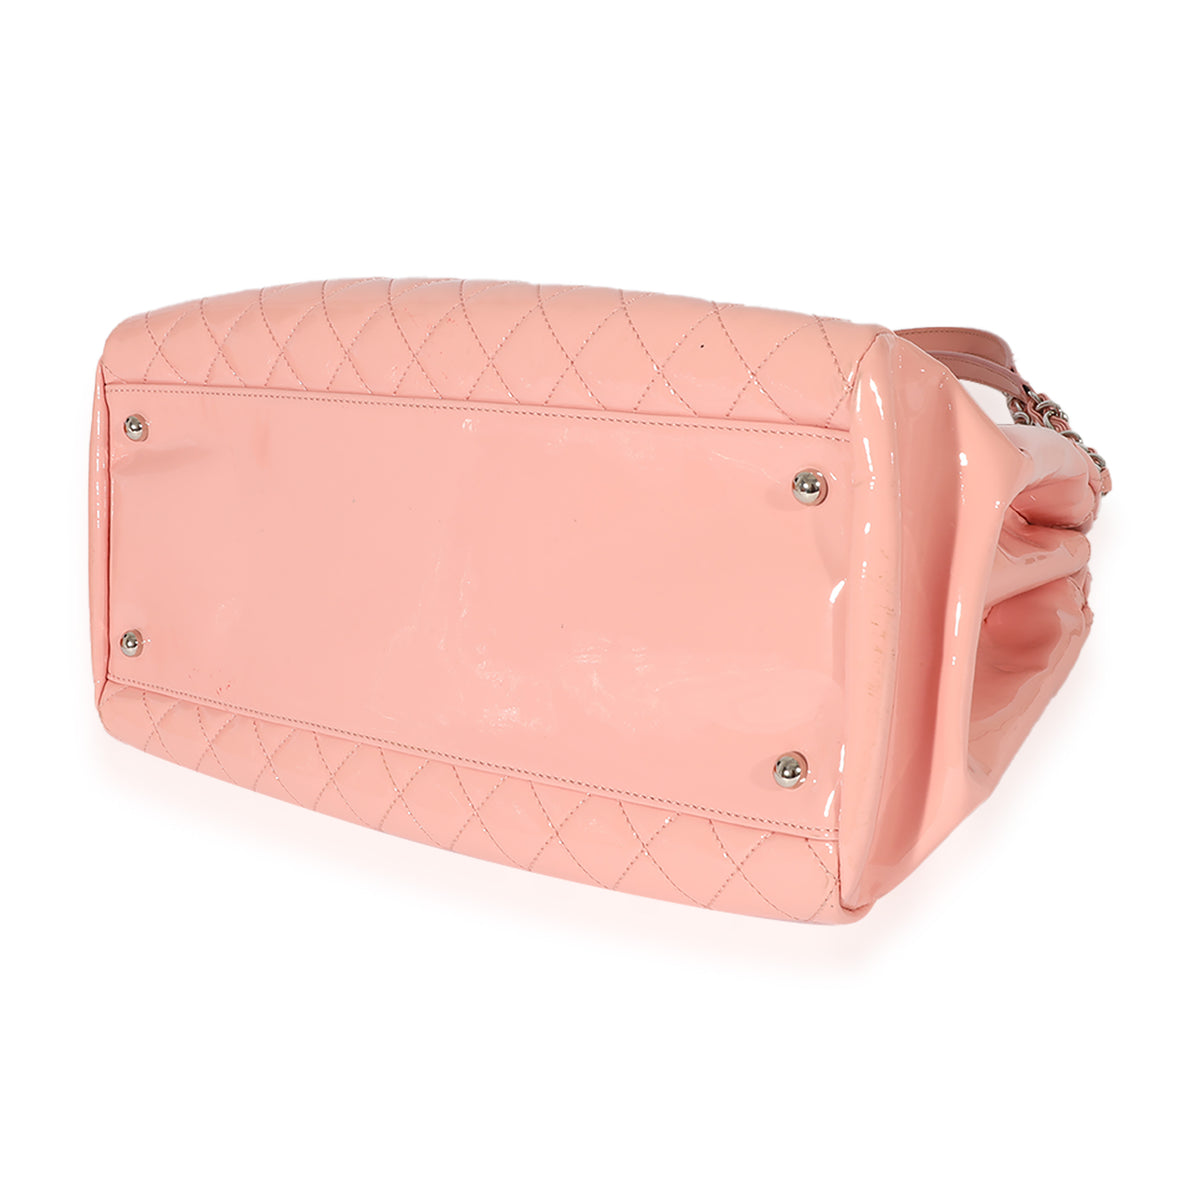 Chanel Pink Mademoiselle Flap Bag